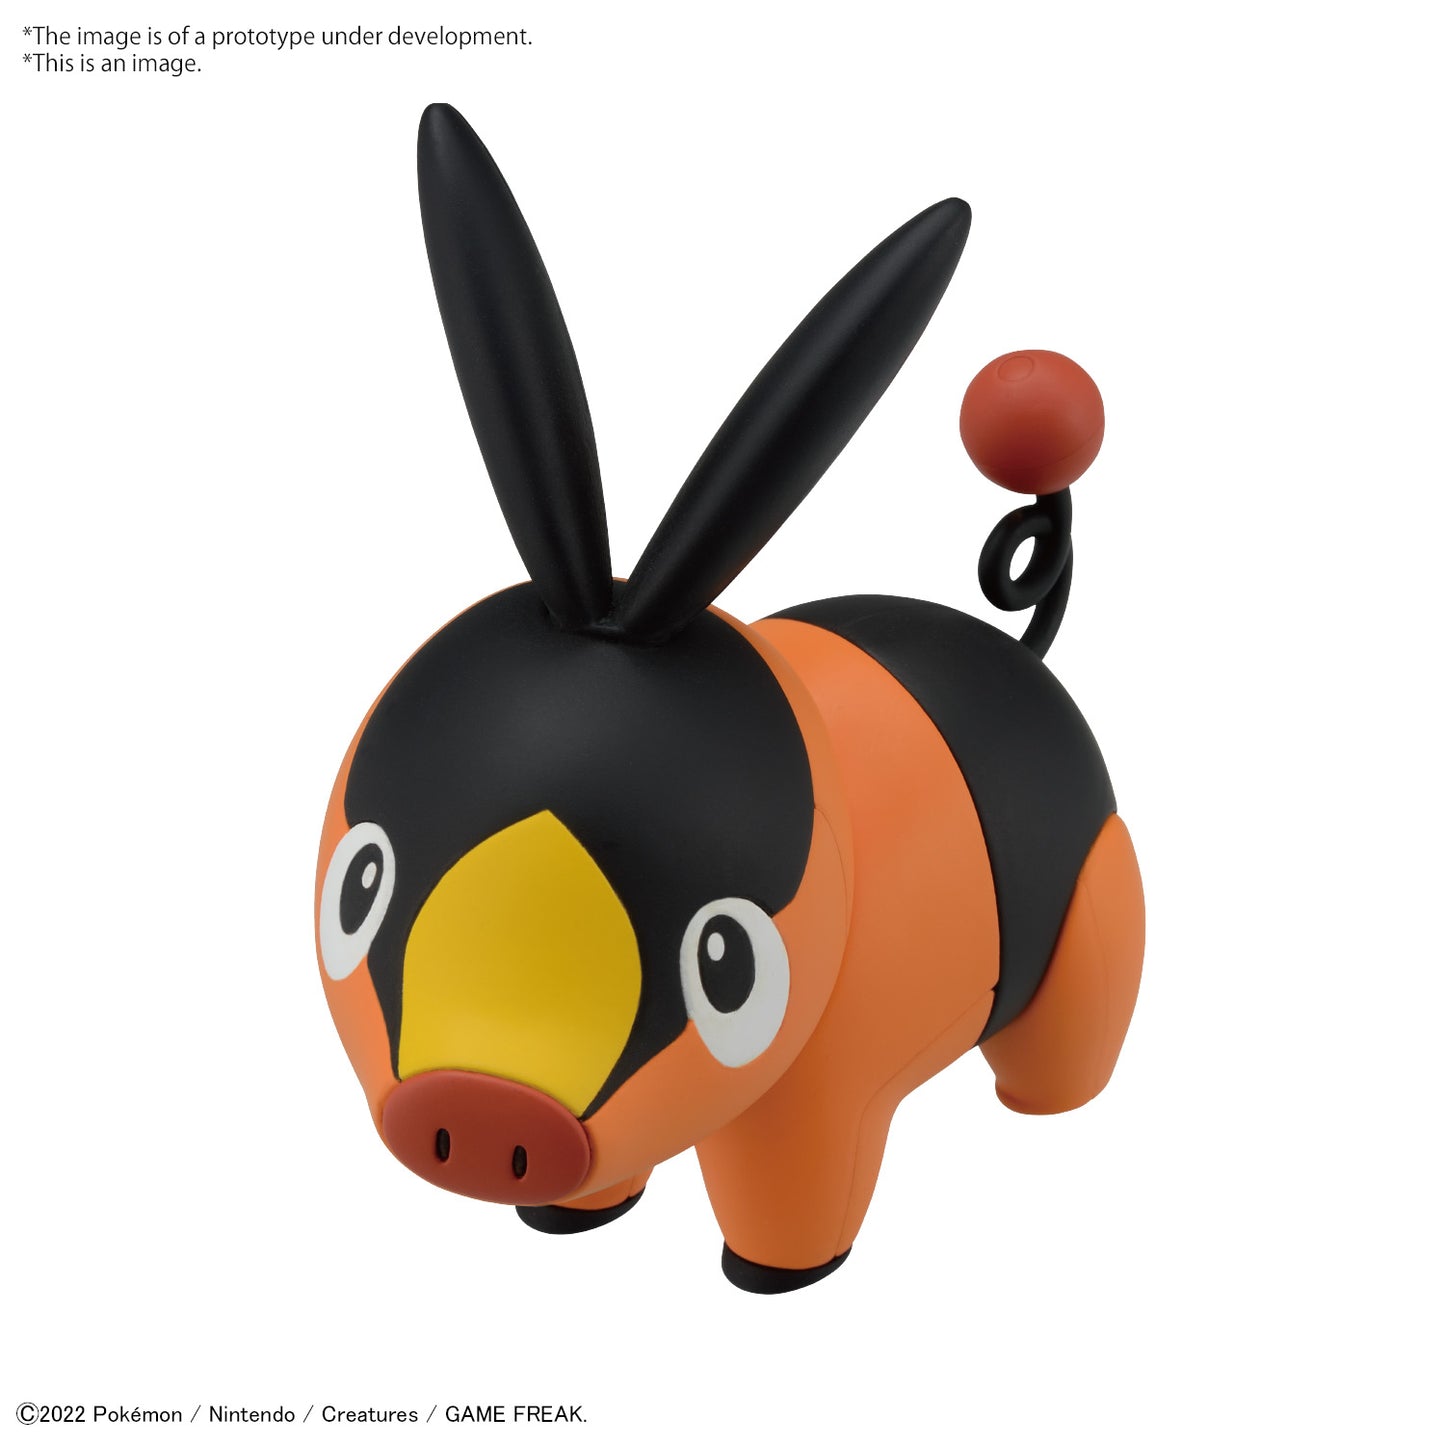 Pokémon Model Kit QUICK!! 14 TEPIG